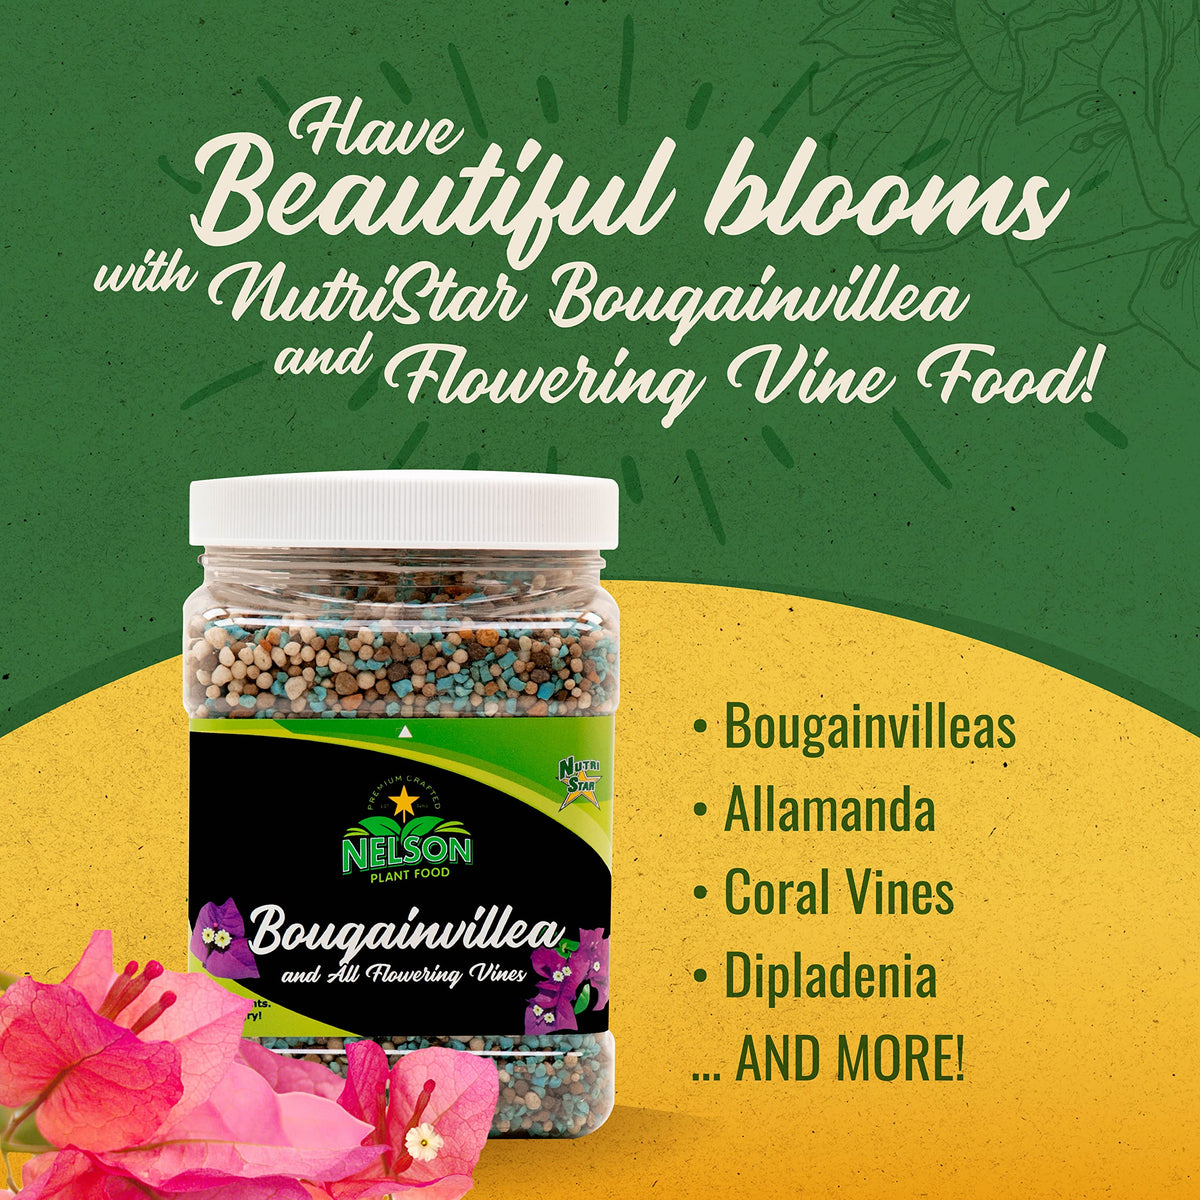 Bougainvillea Fertilizer - Outdoor and Indoor Plant Fertilizer